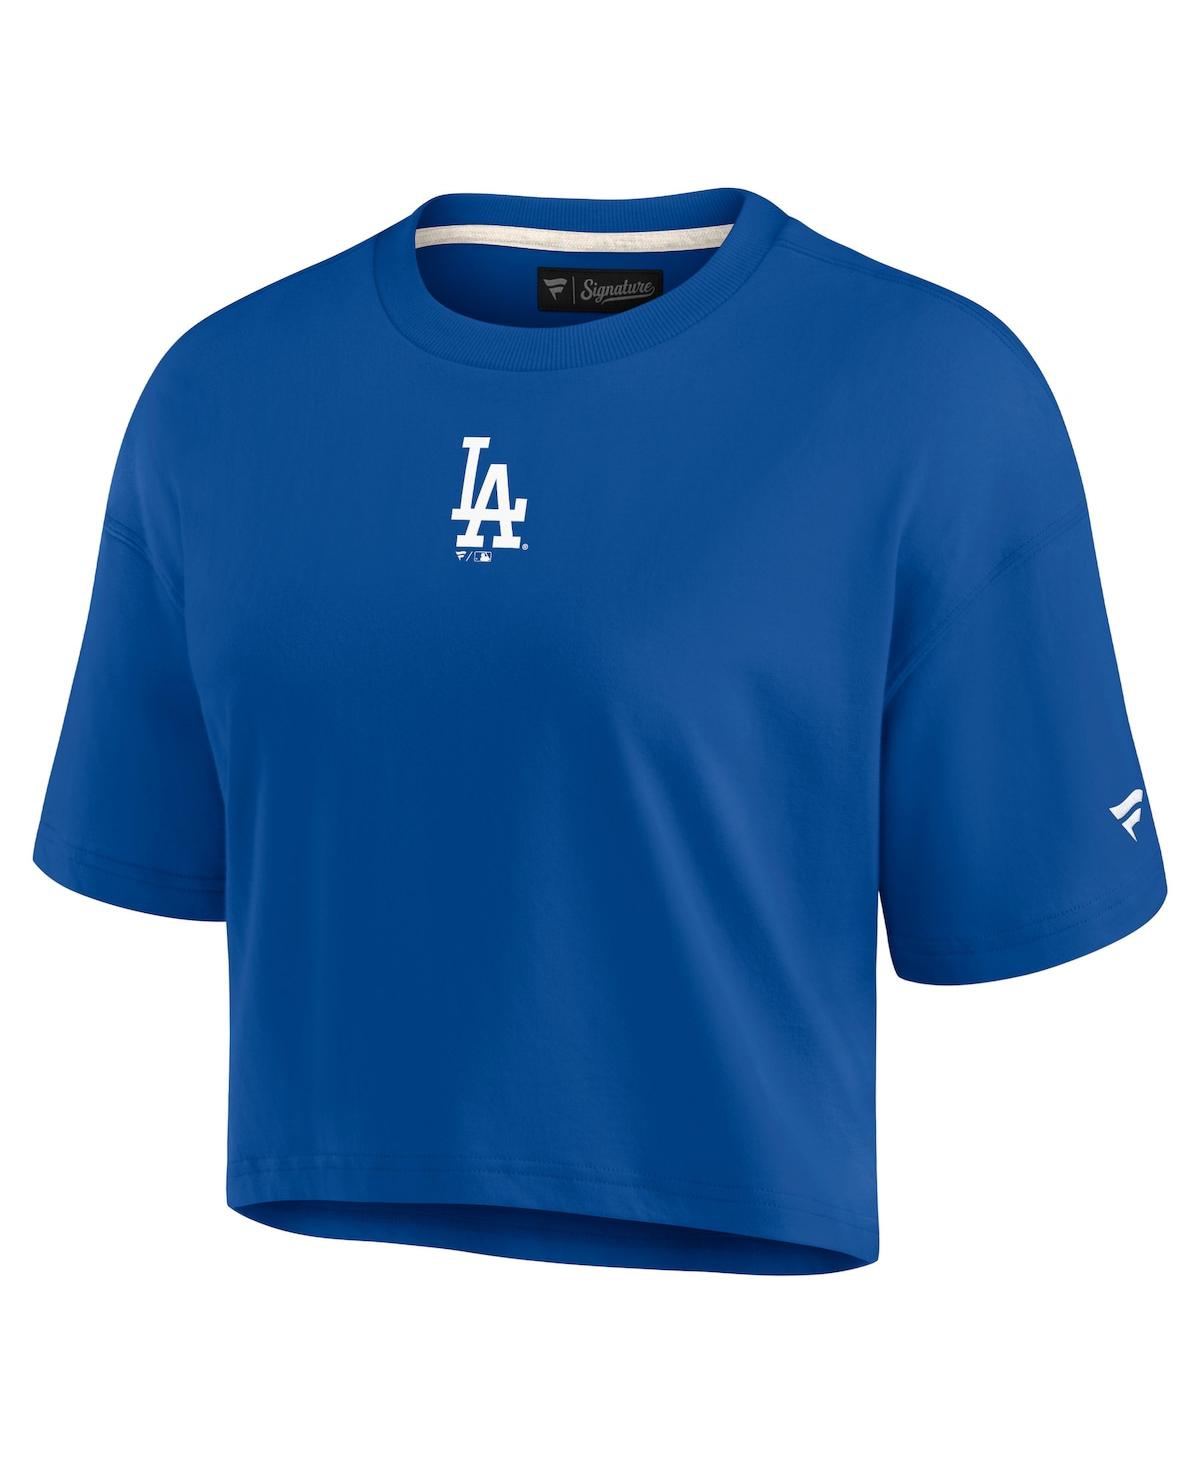 Shop Fanatics Signature Women's  Royal Los Angeles Dodgers Super Soft Short Sleeve Cropped T-shirt